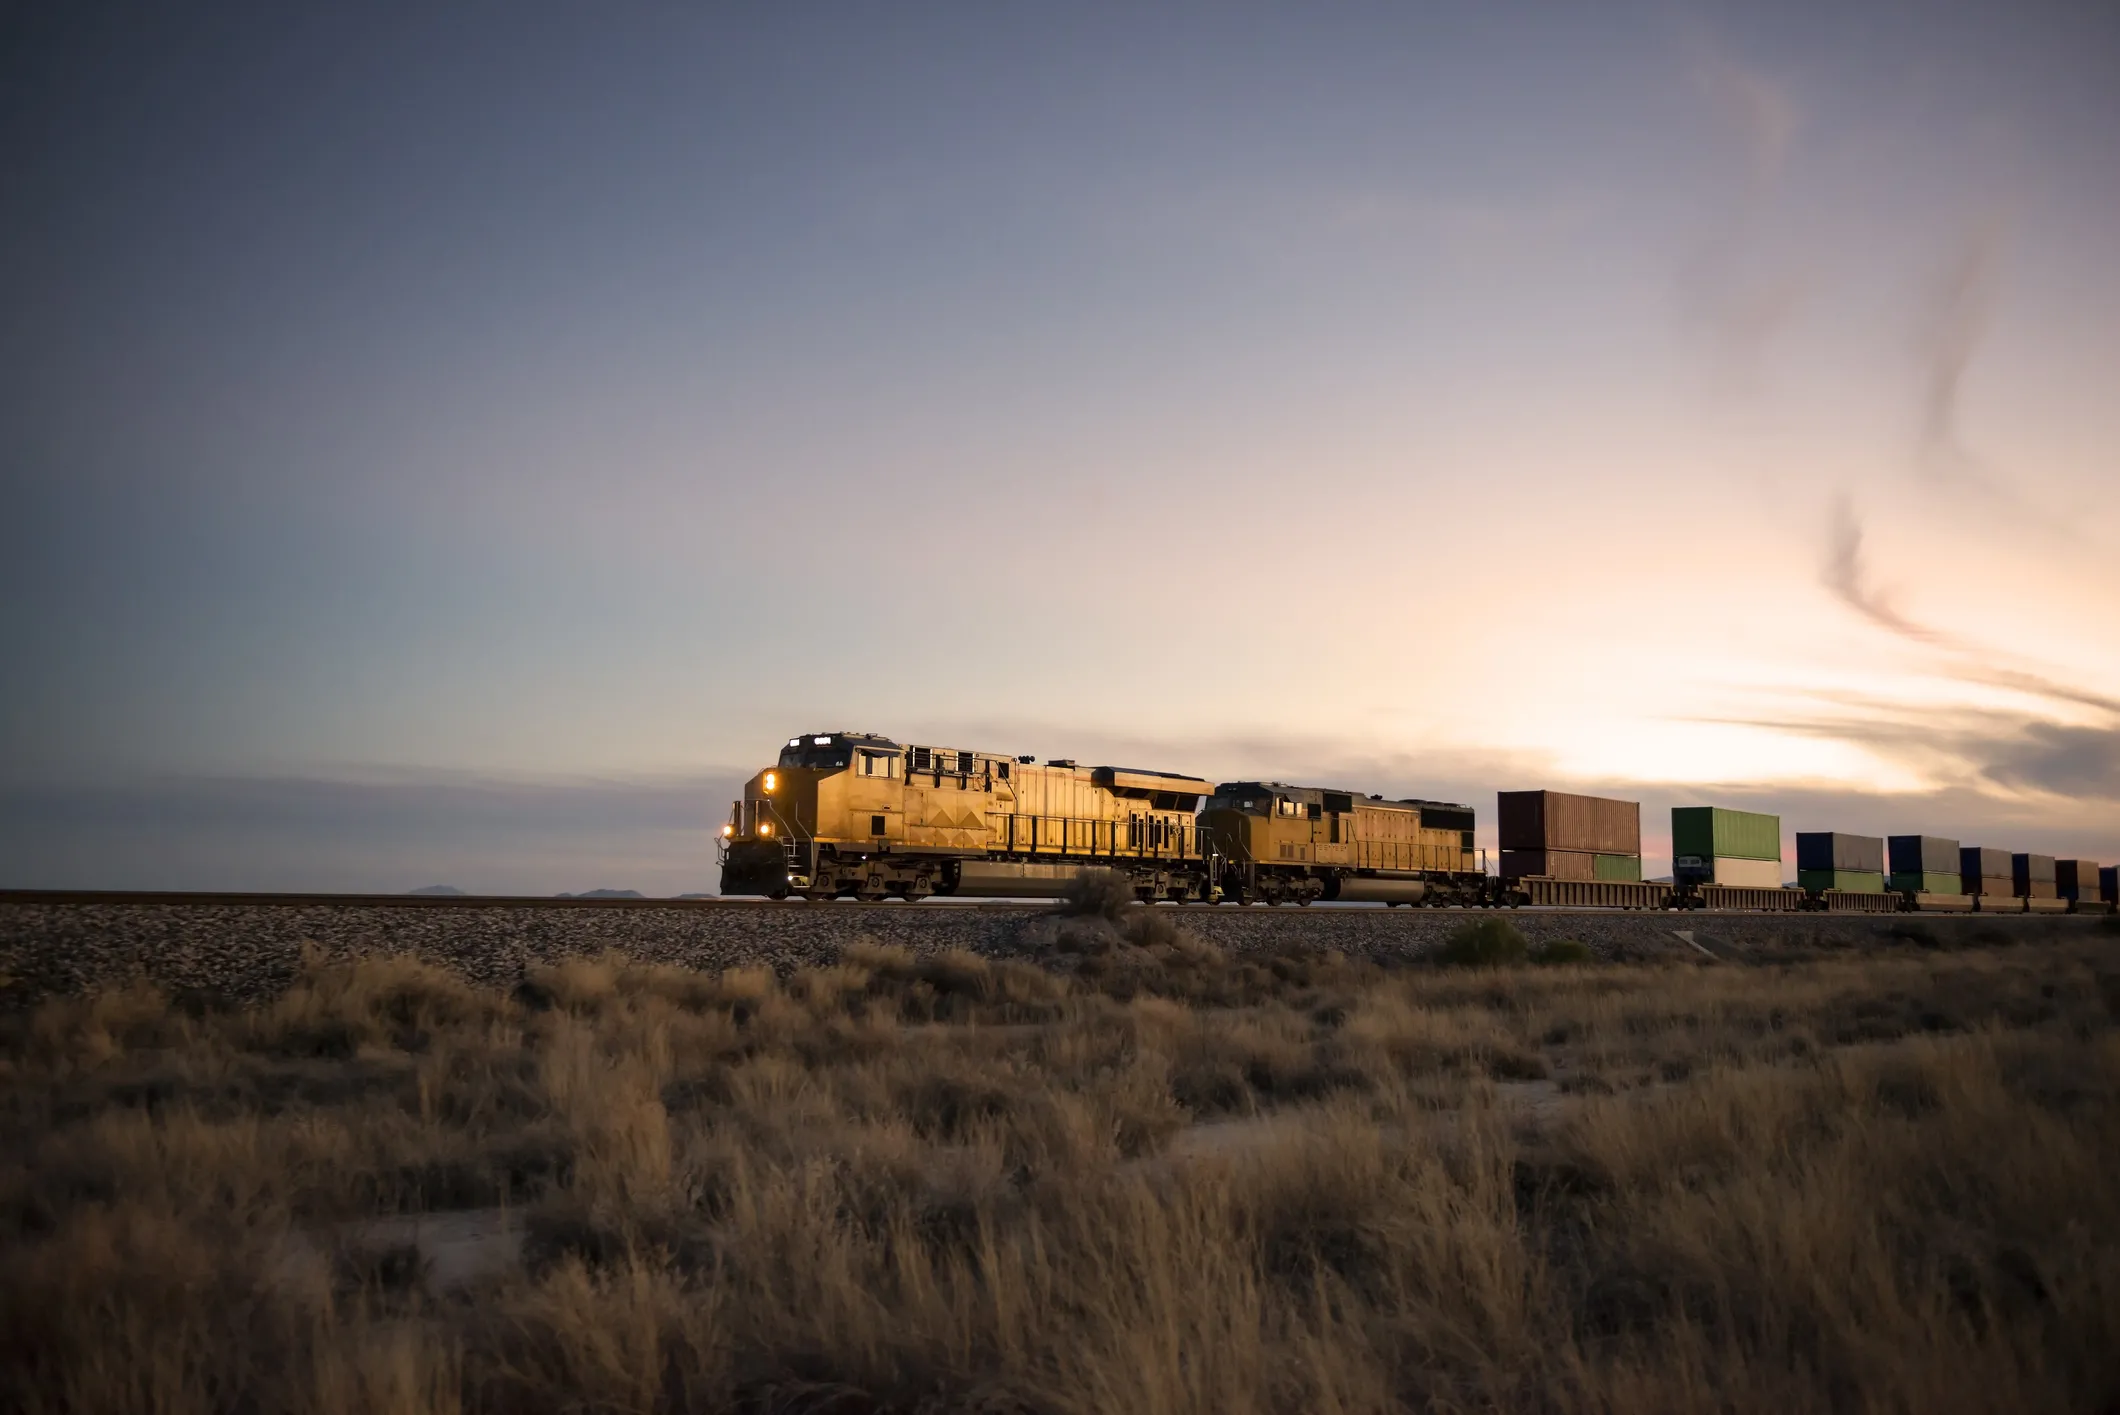 Railroad locomotive at dusk